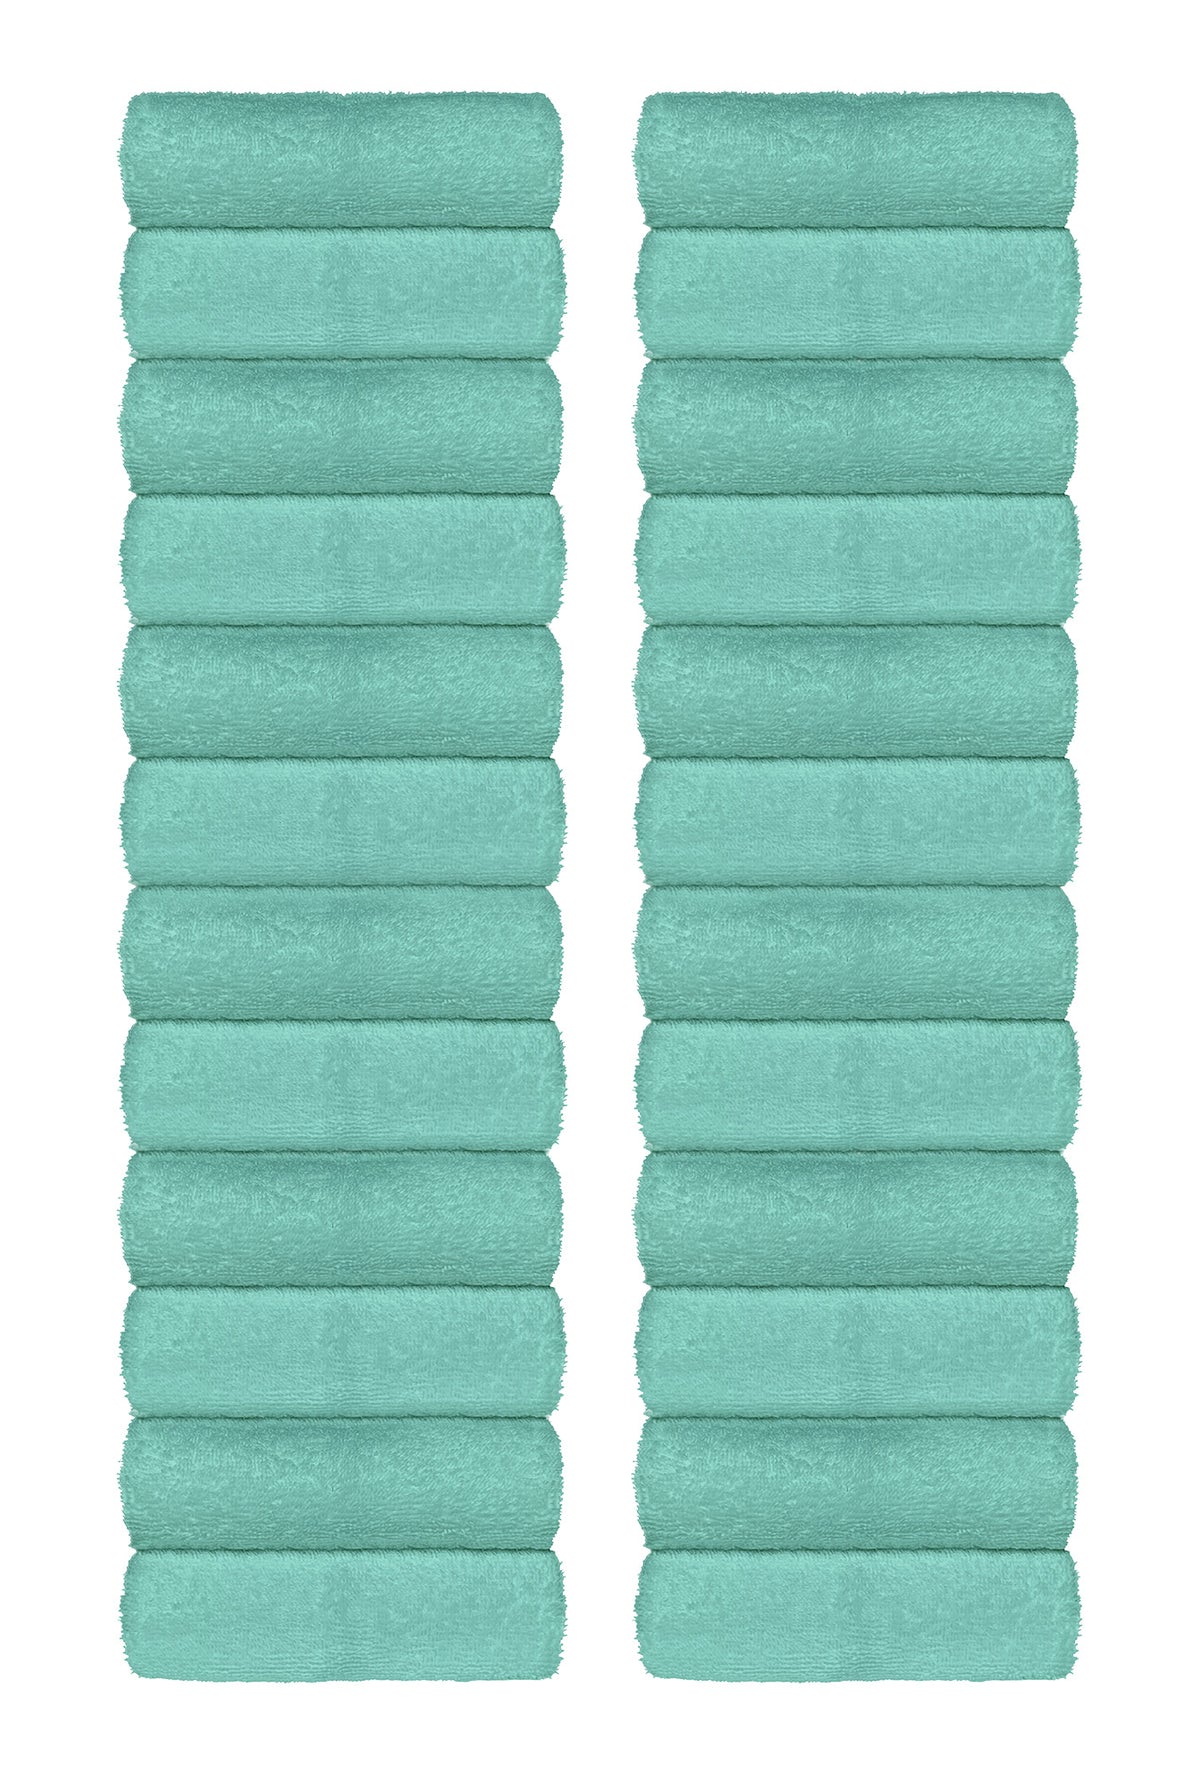 Set Asciugamani Bagno 100% Cotone Super Assorbenti Telo Doccia Spugna Professionali Salvietta Lavetta Viso Asciugamano Teli Asciugamano - Verde